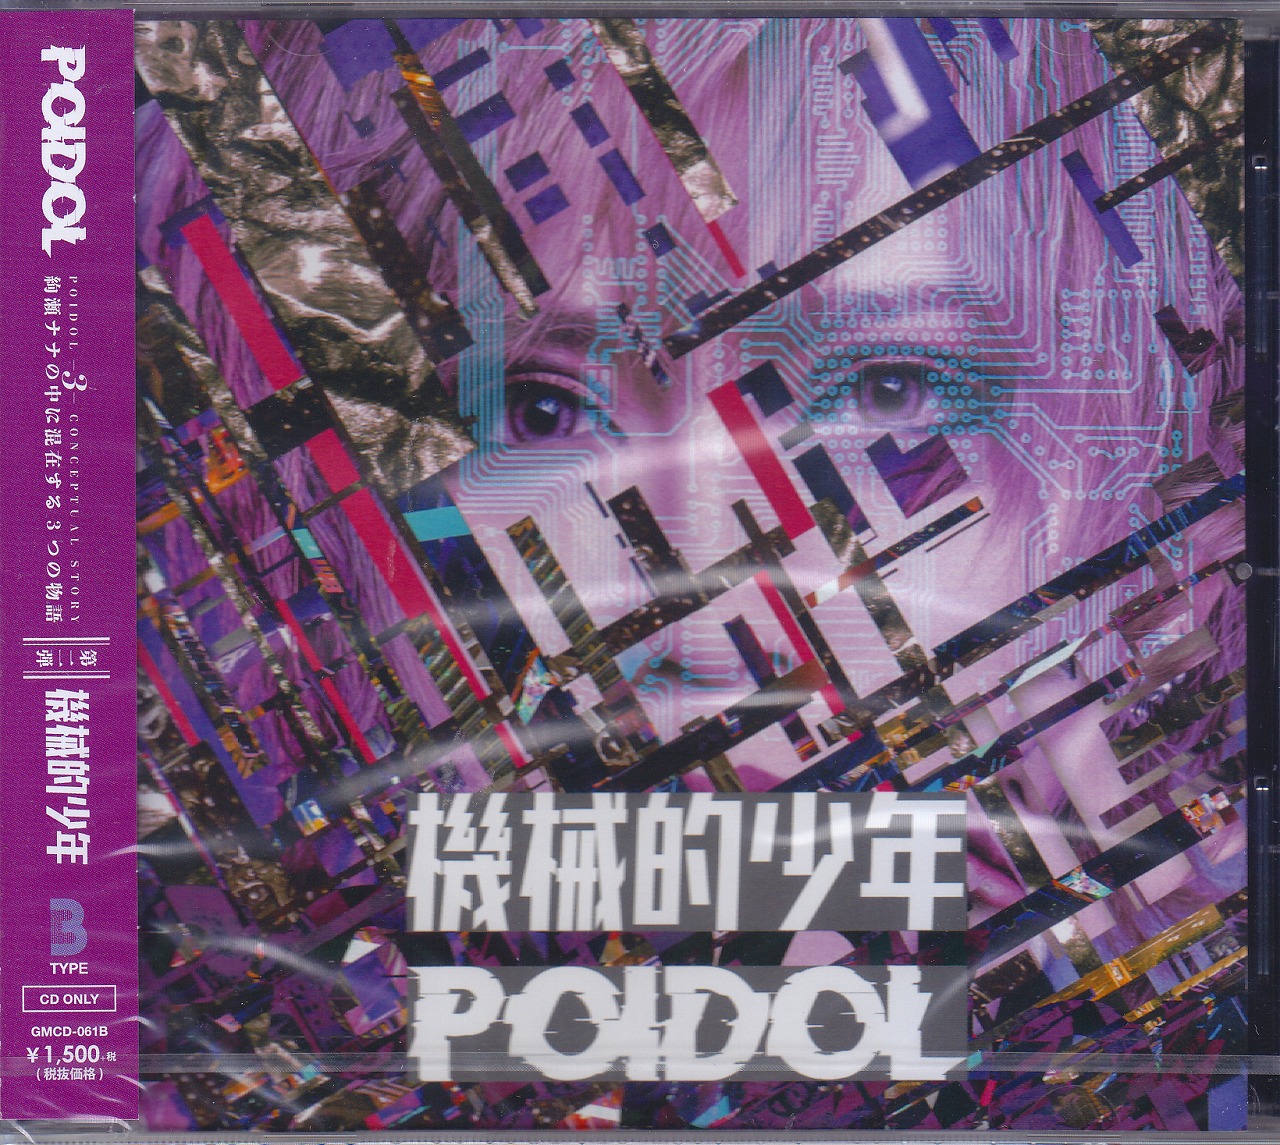 POIDOL ( ポイドル )  の CD 【Btype】機械的少年